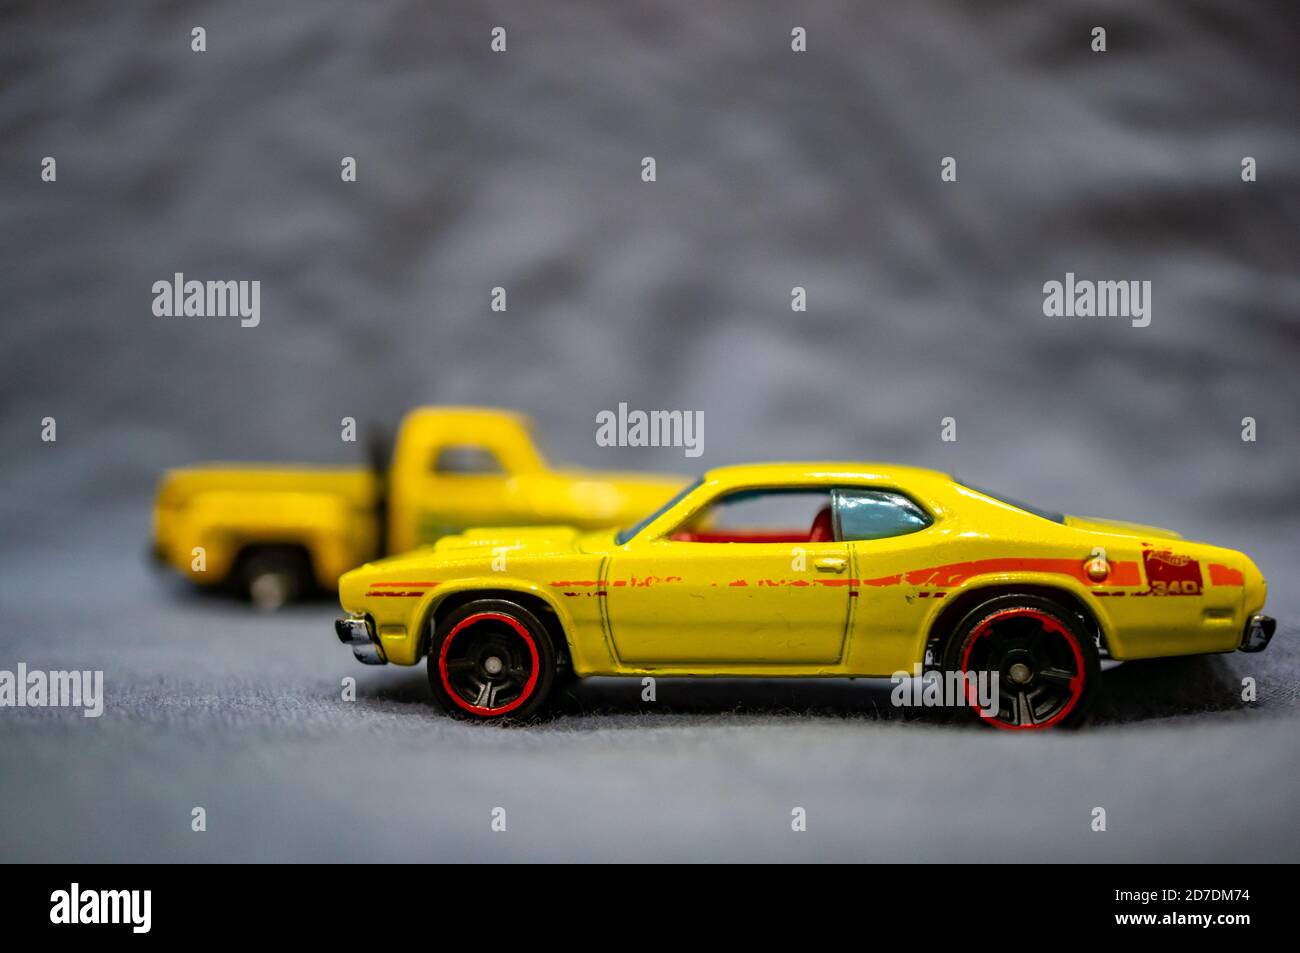 POZNAN, POLAND - Oct 20, 2020: Mattel Hot Wheels yellow classic Chrysler  Dodge Demon toy model car Stock Photo - Alamy